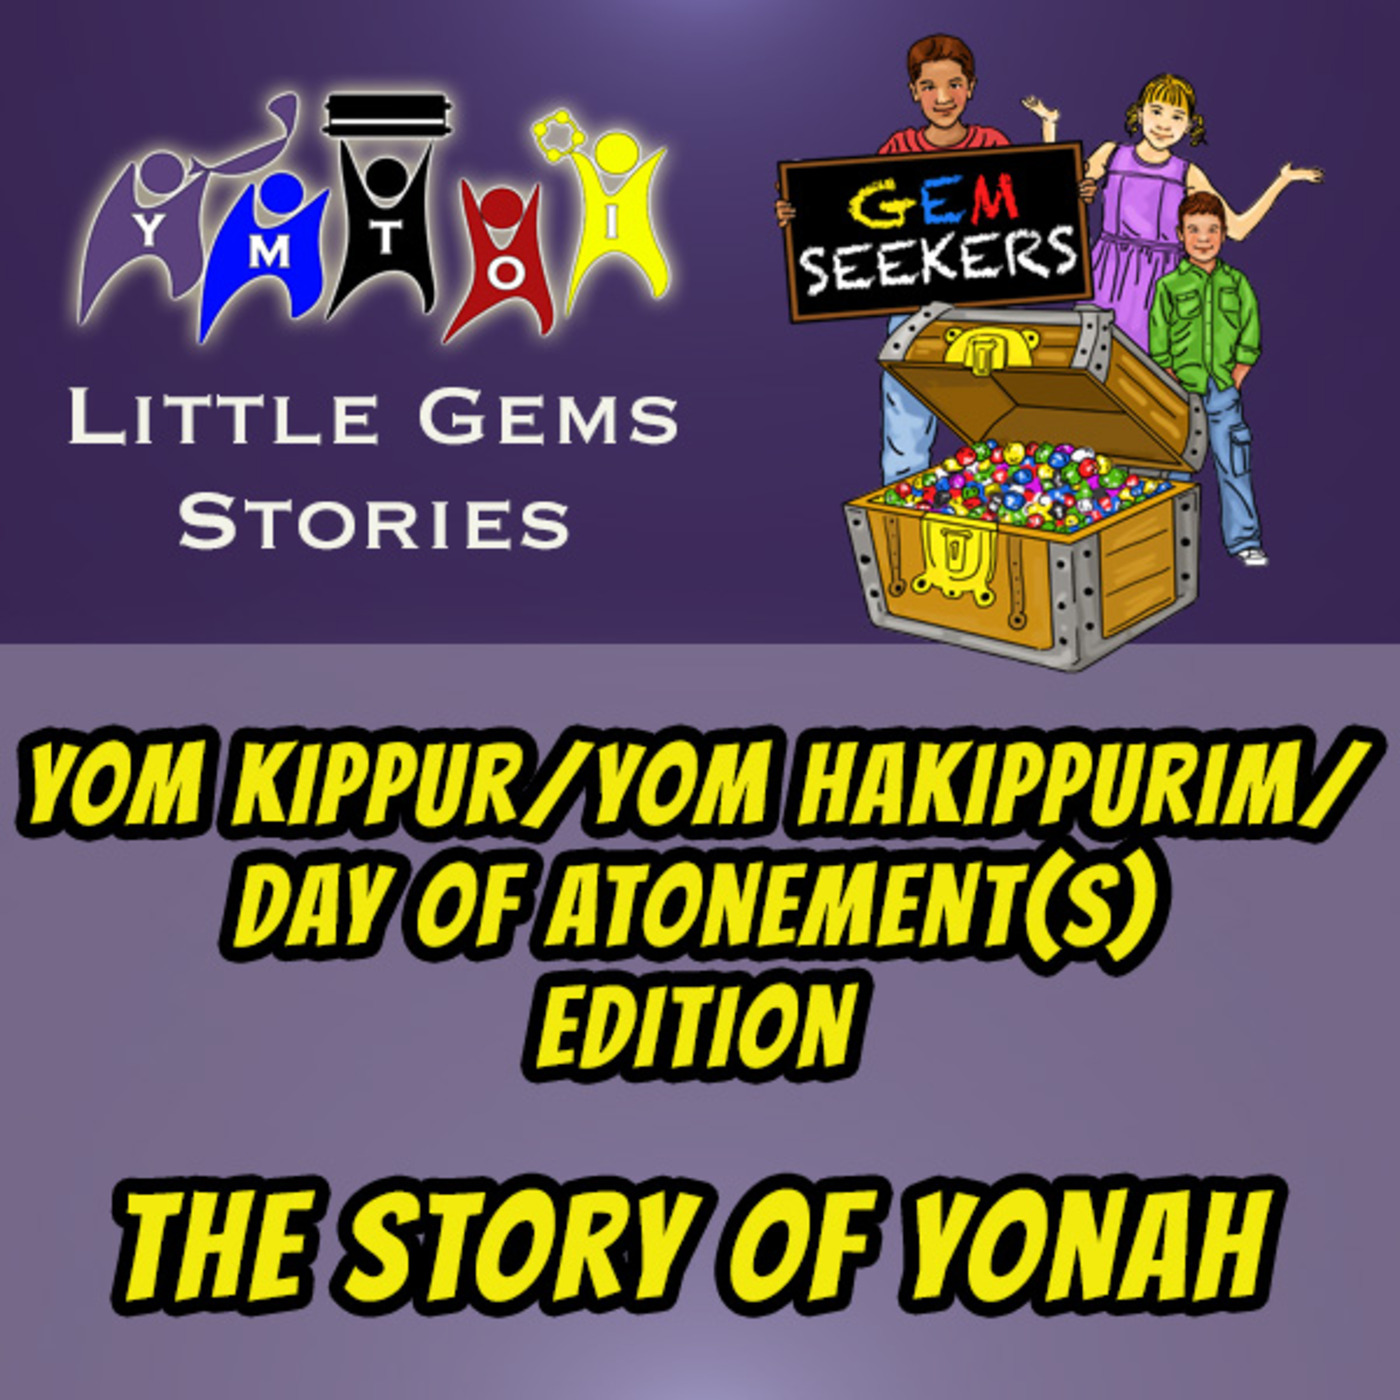 Episode 776: YMTOI Little Gems Story | Yom Kippur/Yom HaKippurim/Day of Atonement(s) Edition | The Story of Yonah